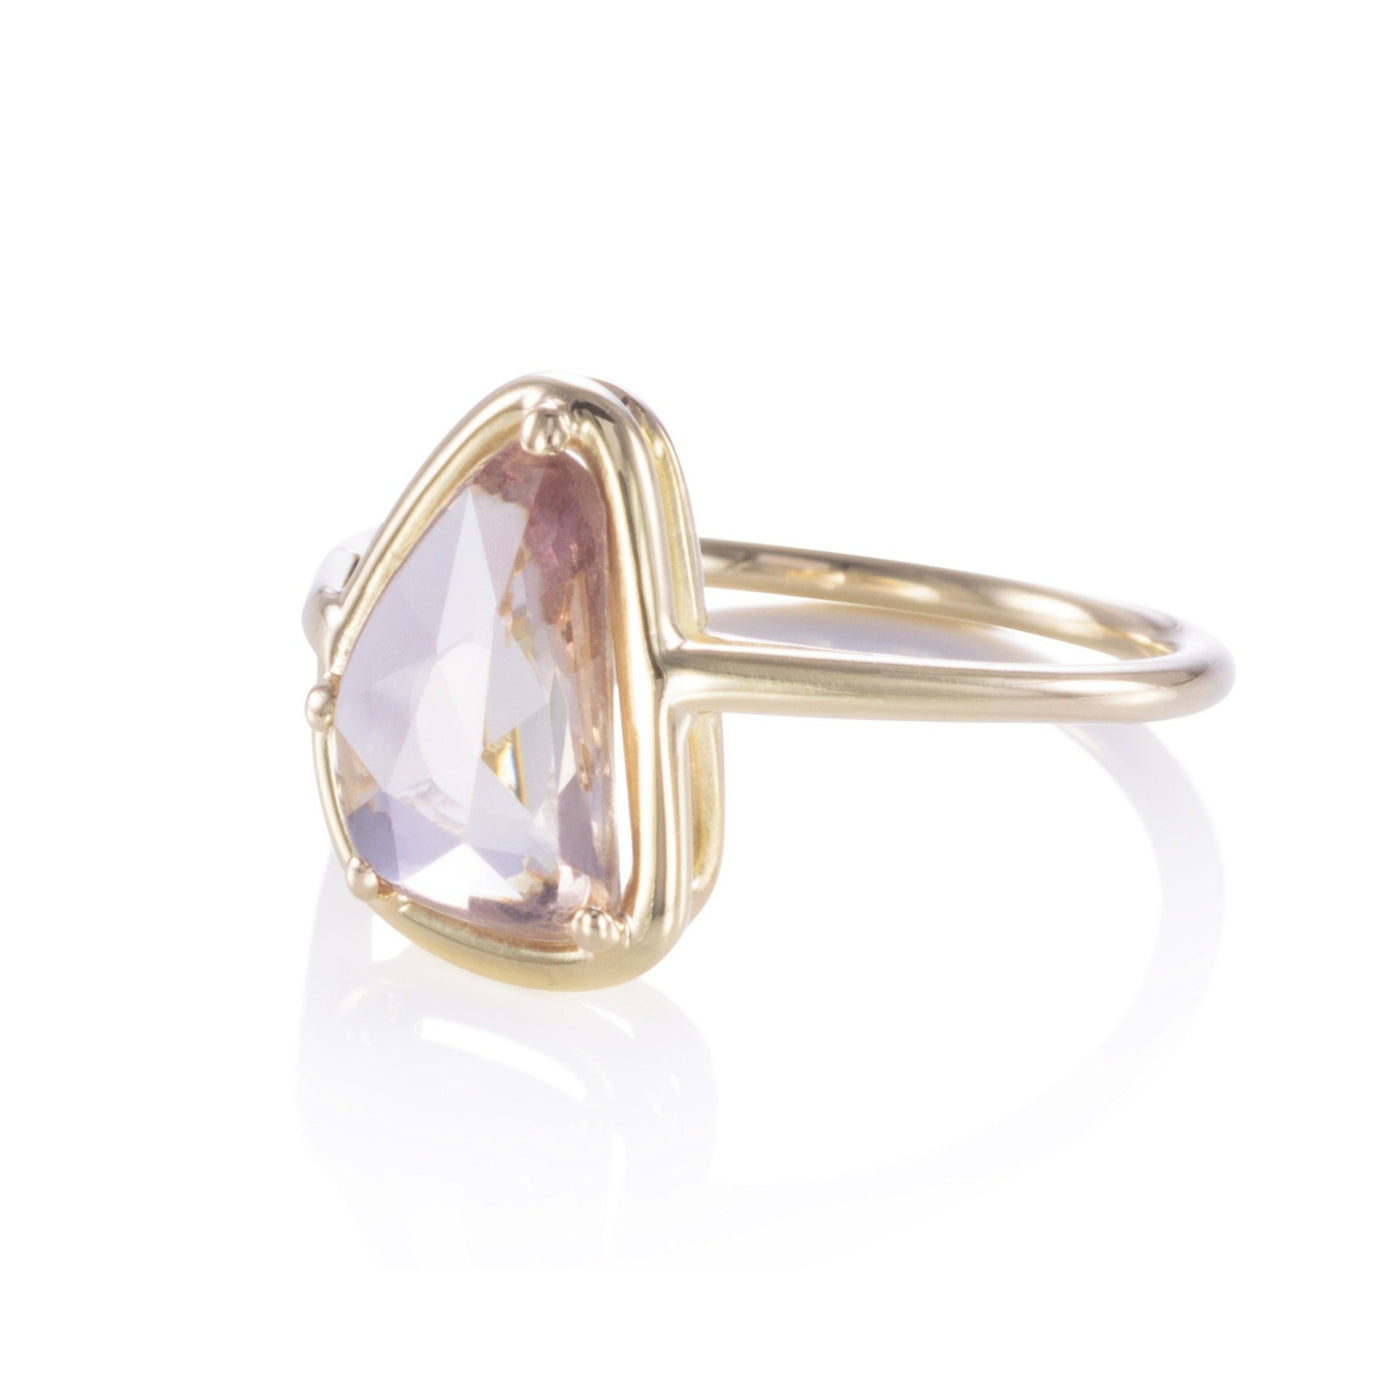 Sapphire Petal Ring "Maxi" - Light orange sapphire